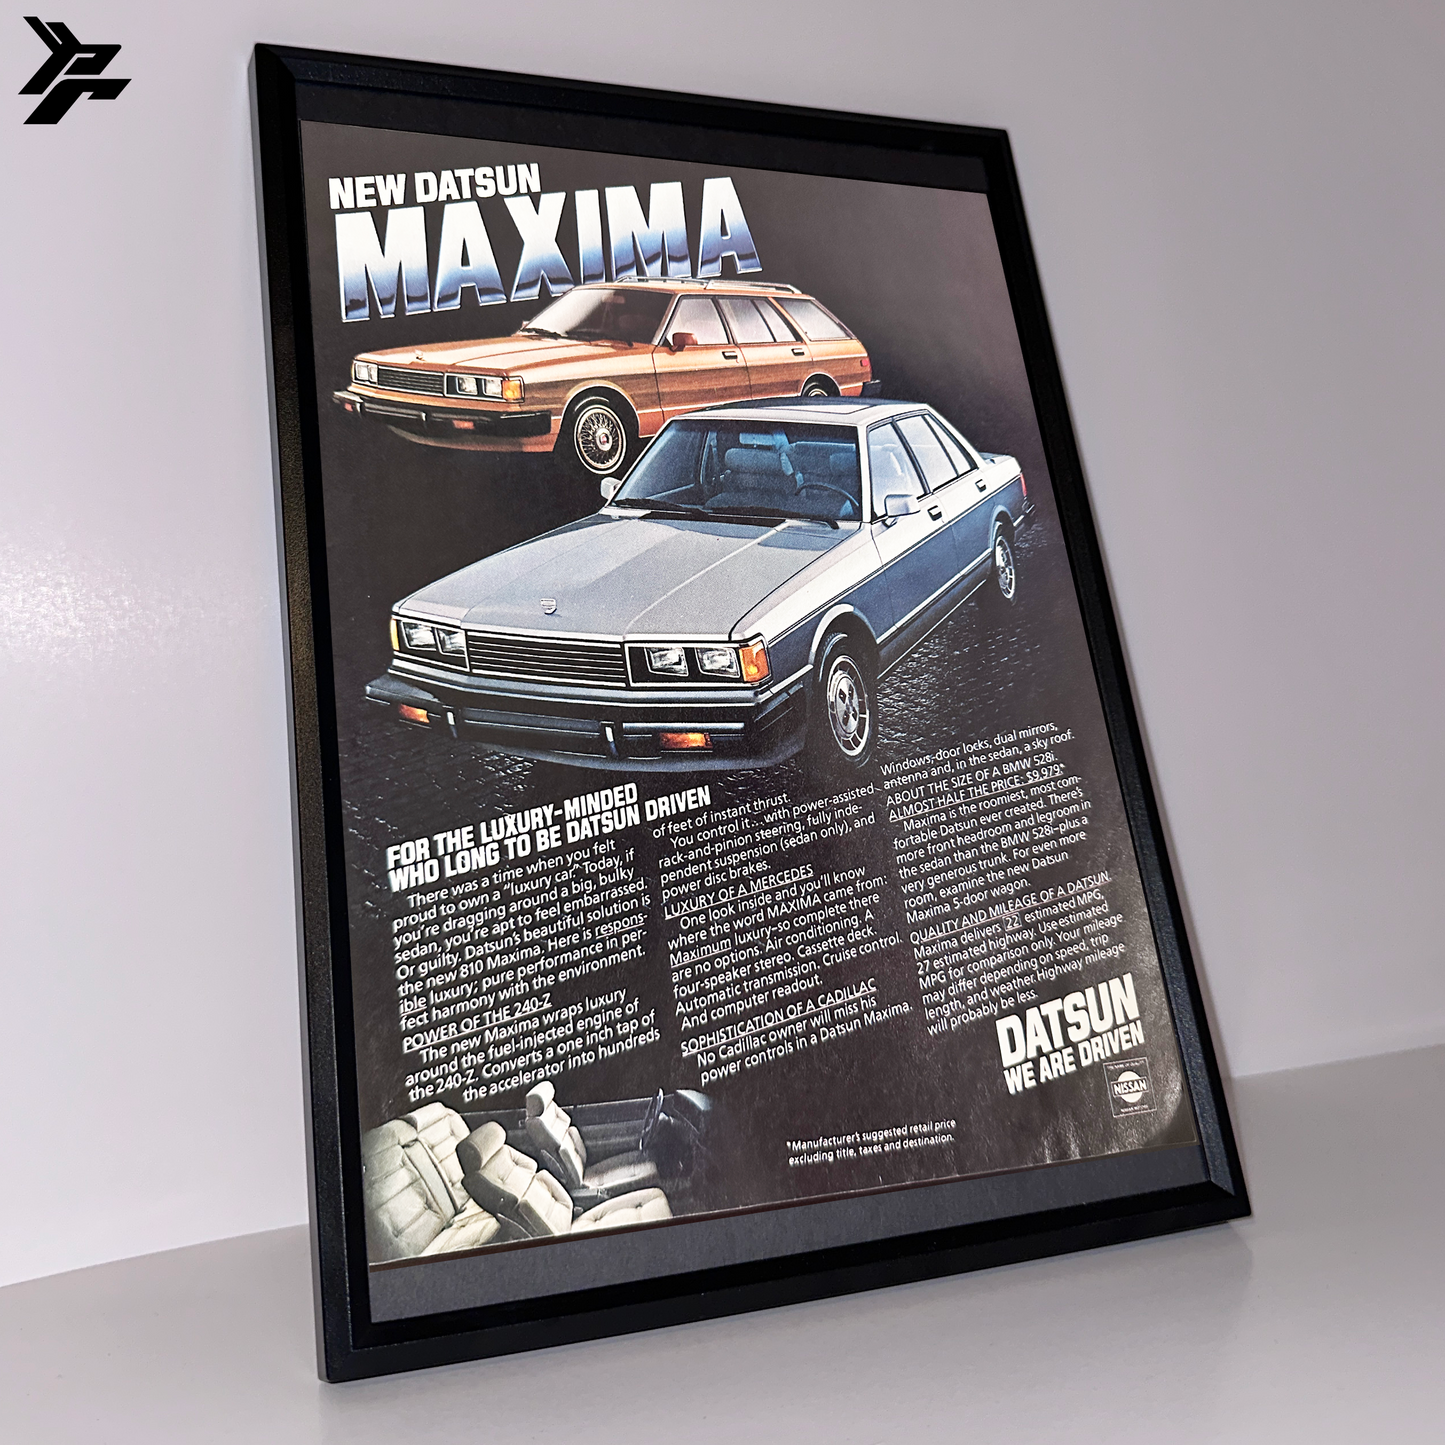 New Datsun Maxima framed ad